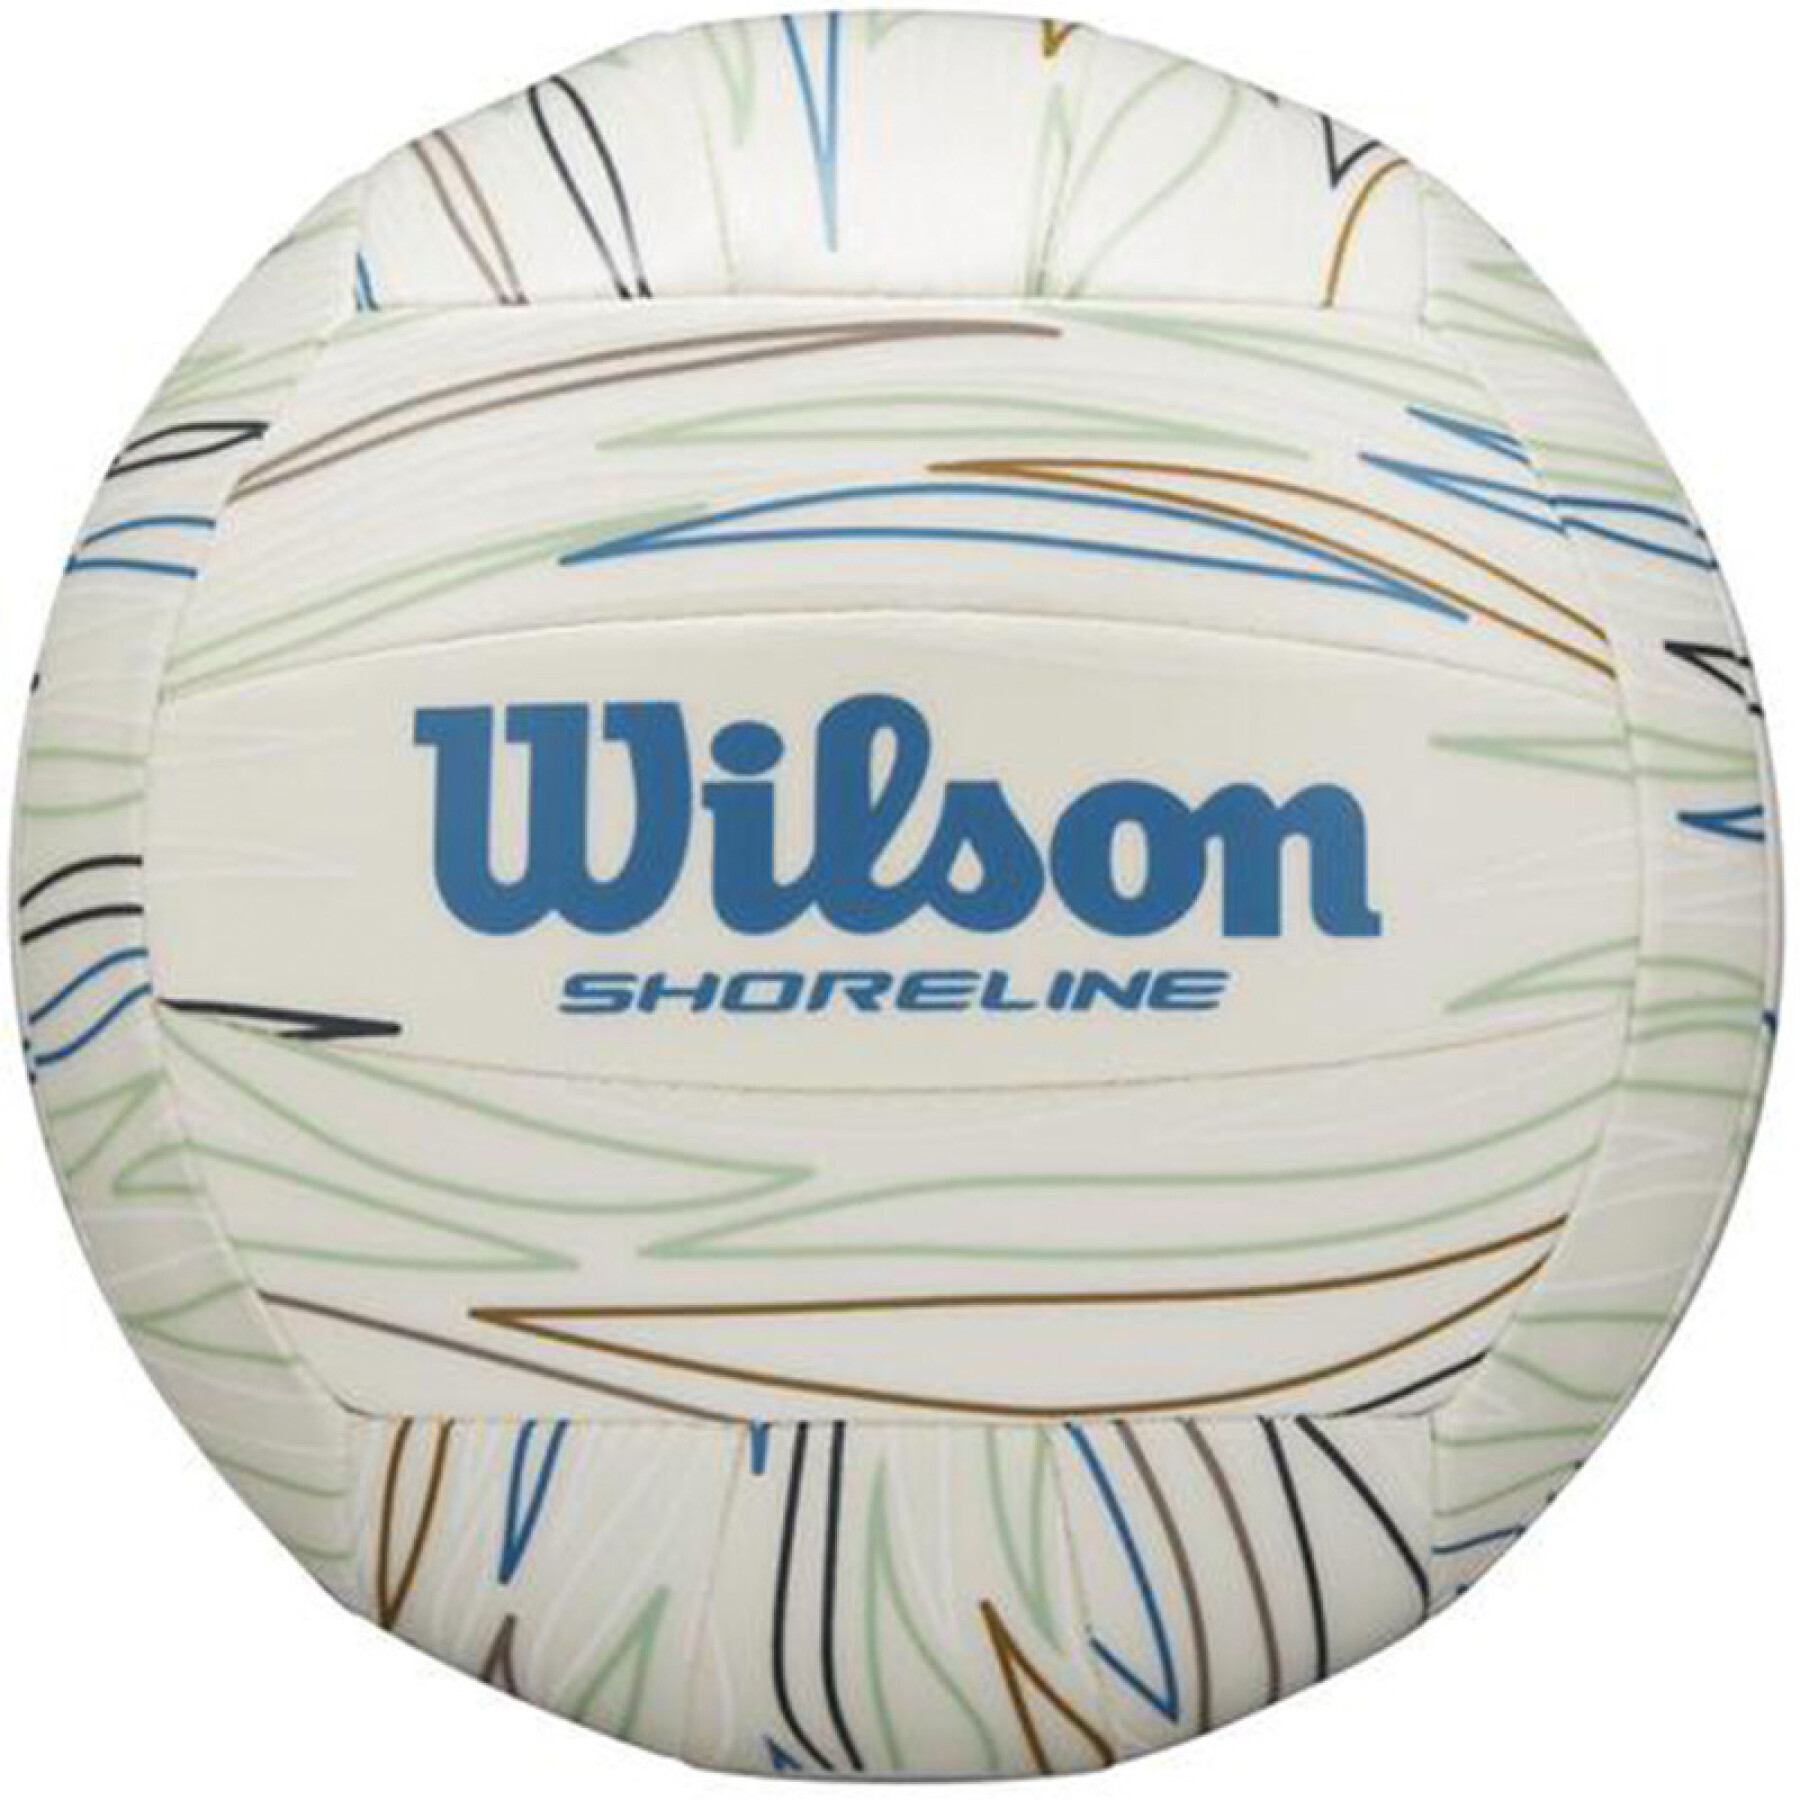 Piłka do siatkówki Wilson Shoreline Eco